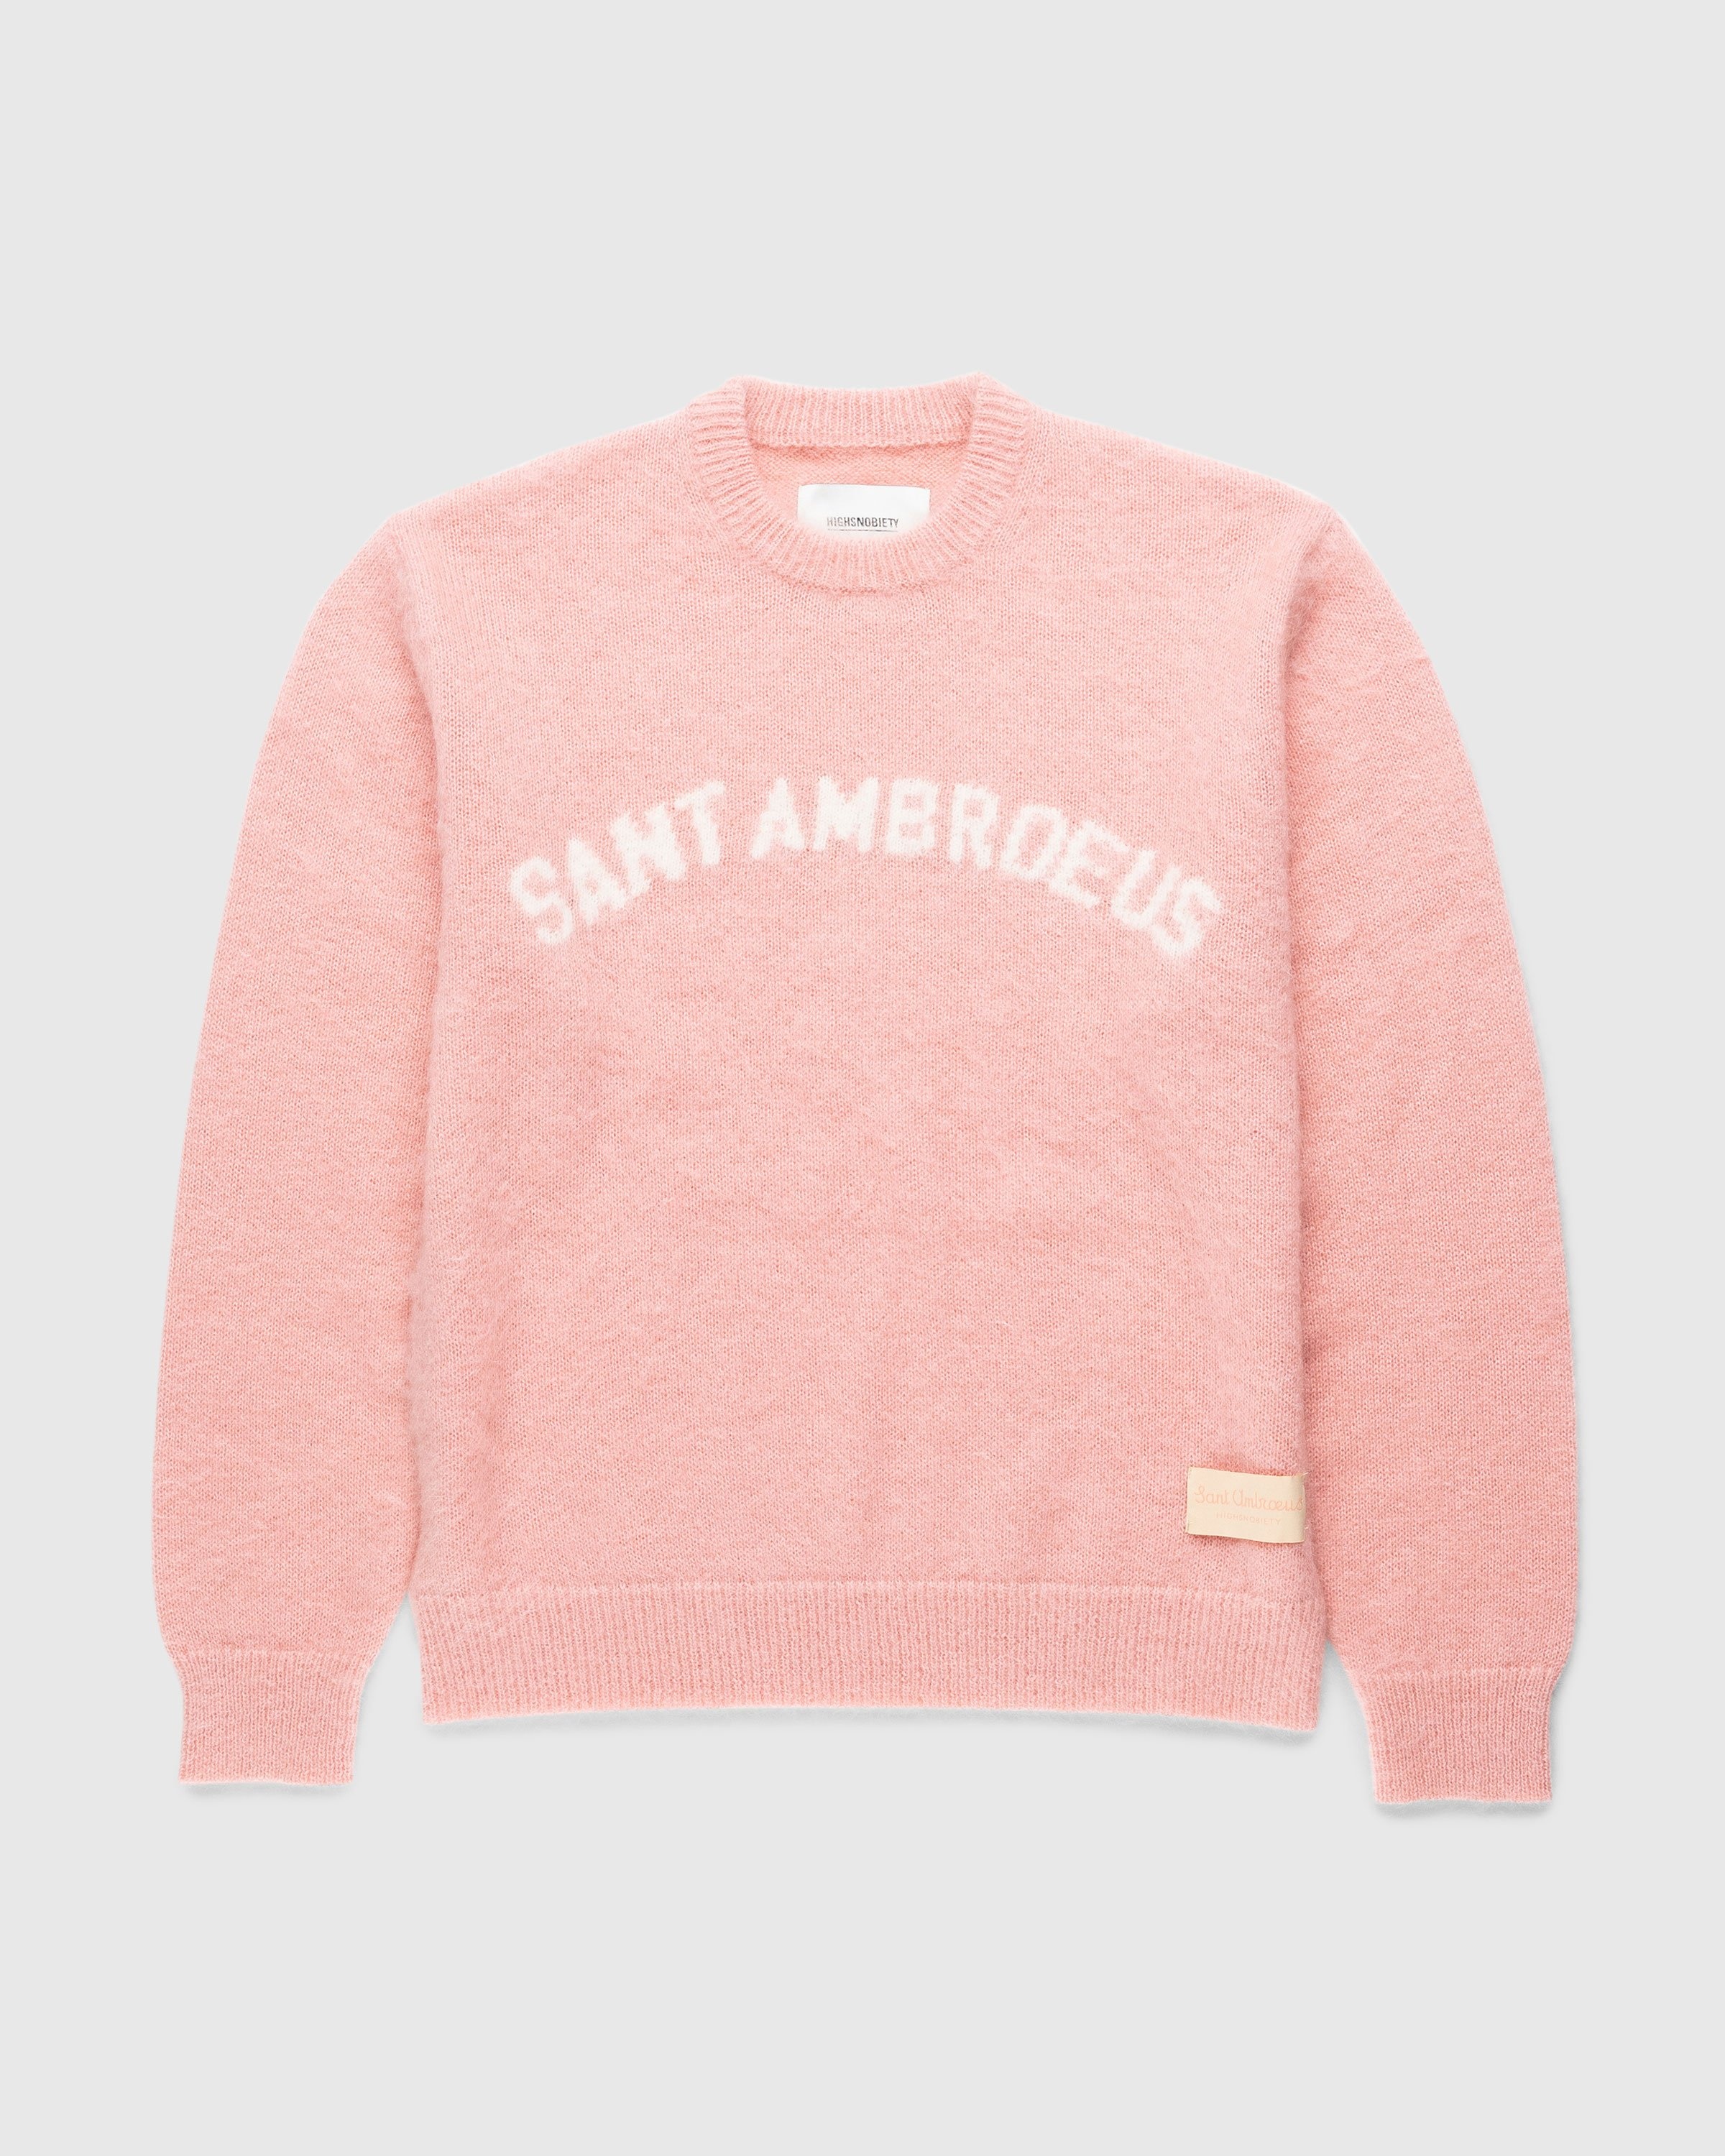 Highsnobiety x Sant Ambroeus – Knit Crewneck Pink  - Knitwear - Pink - Image 1